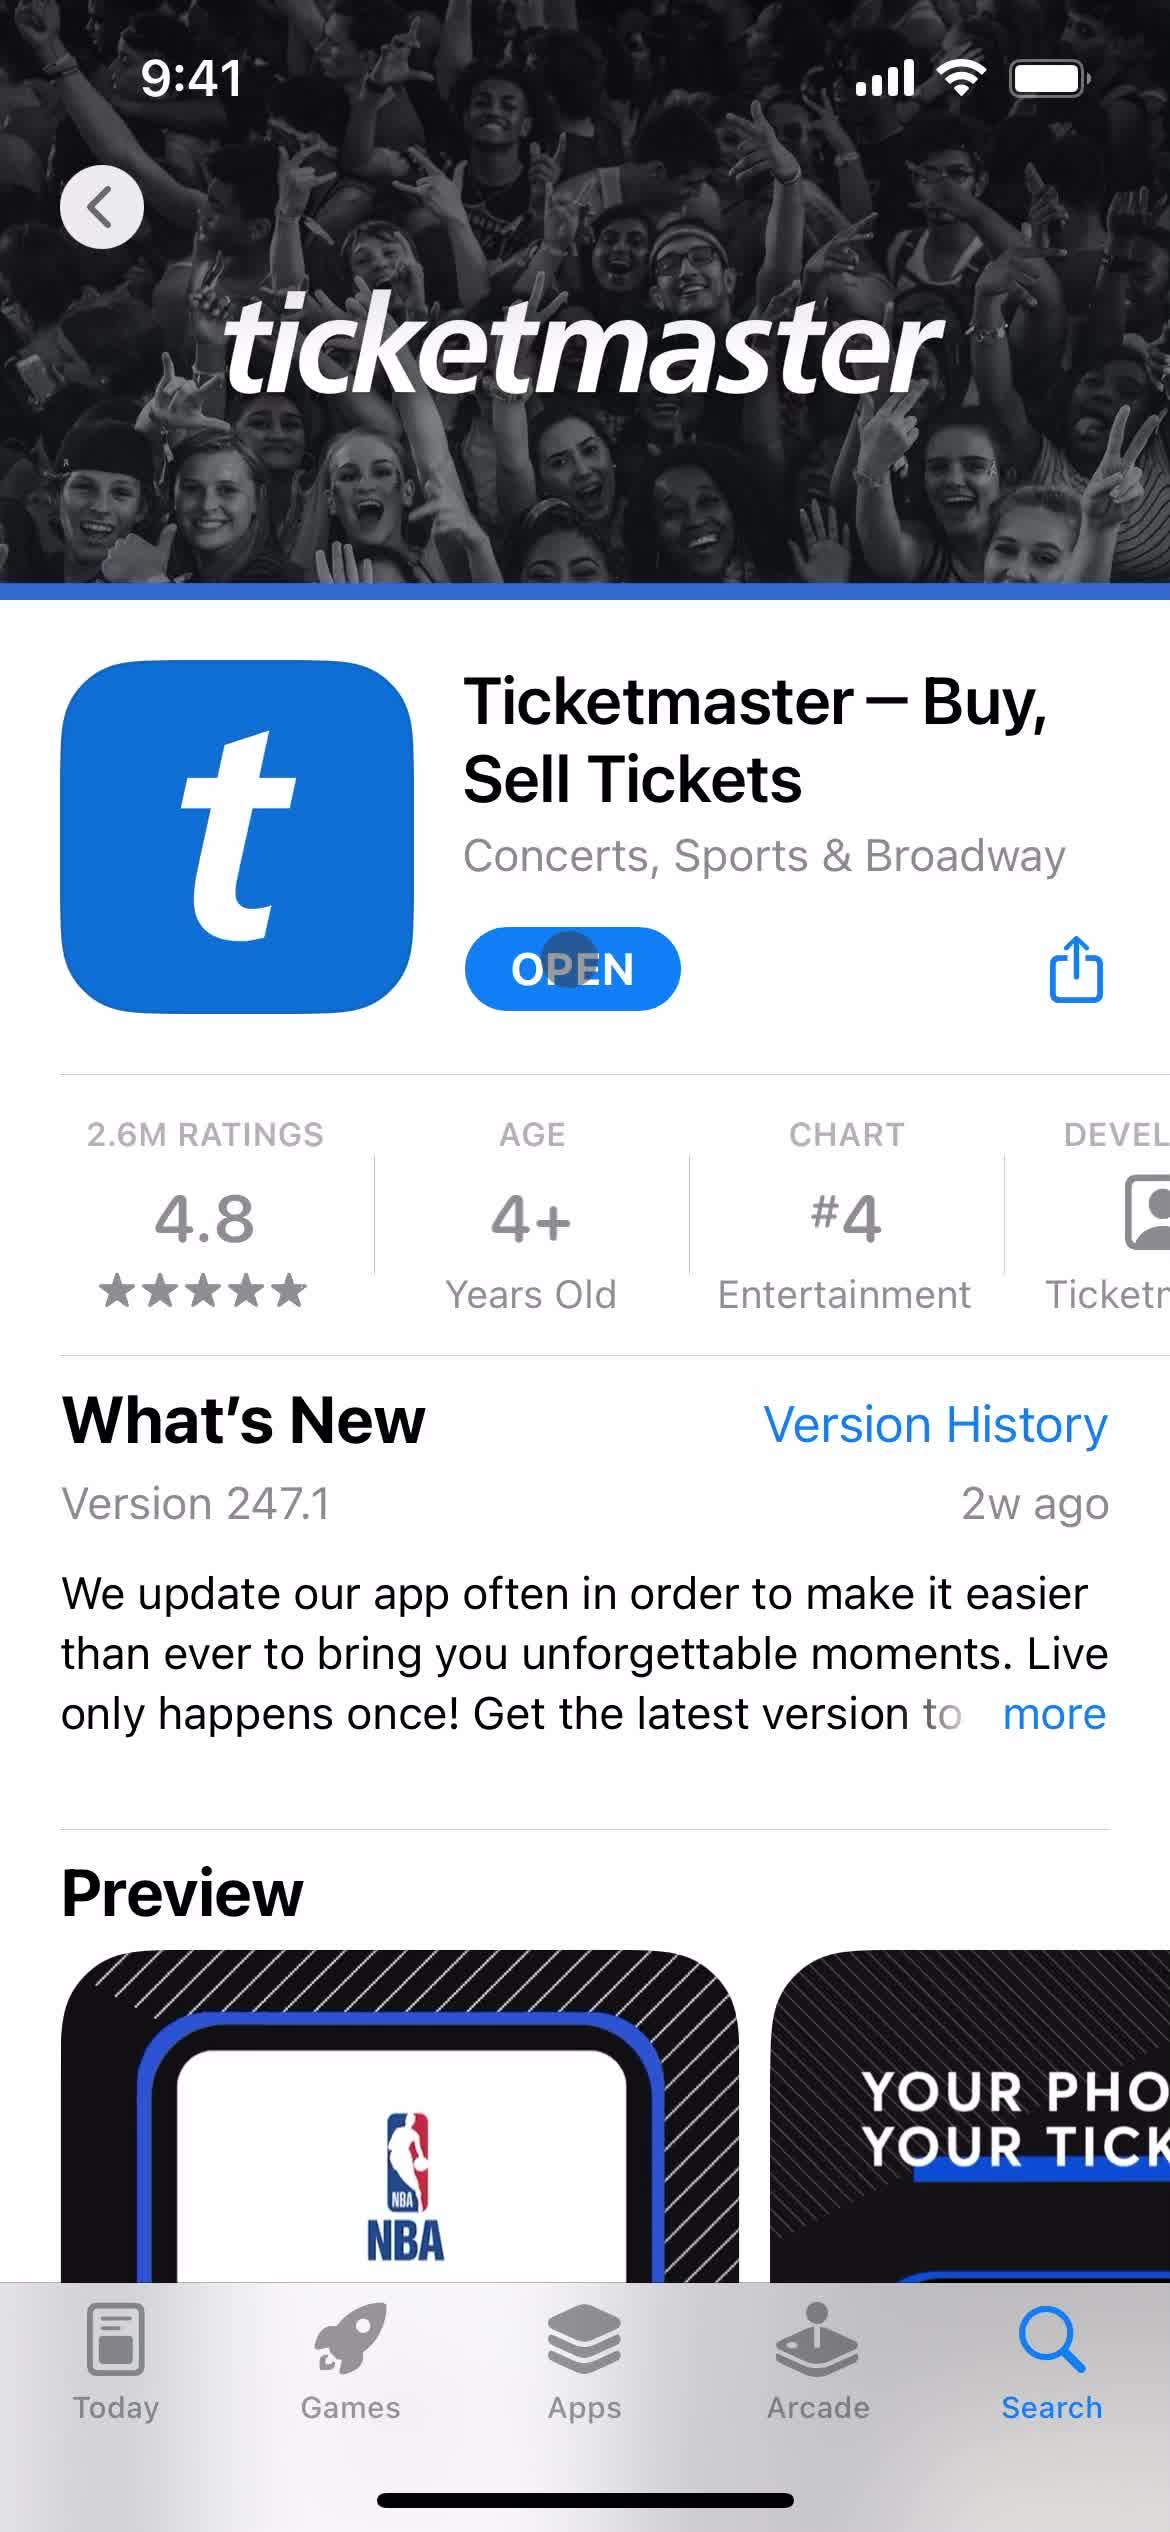 Ticketmaster app store listing screenshot